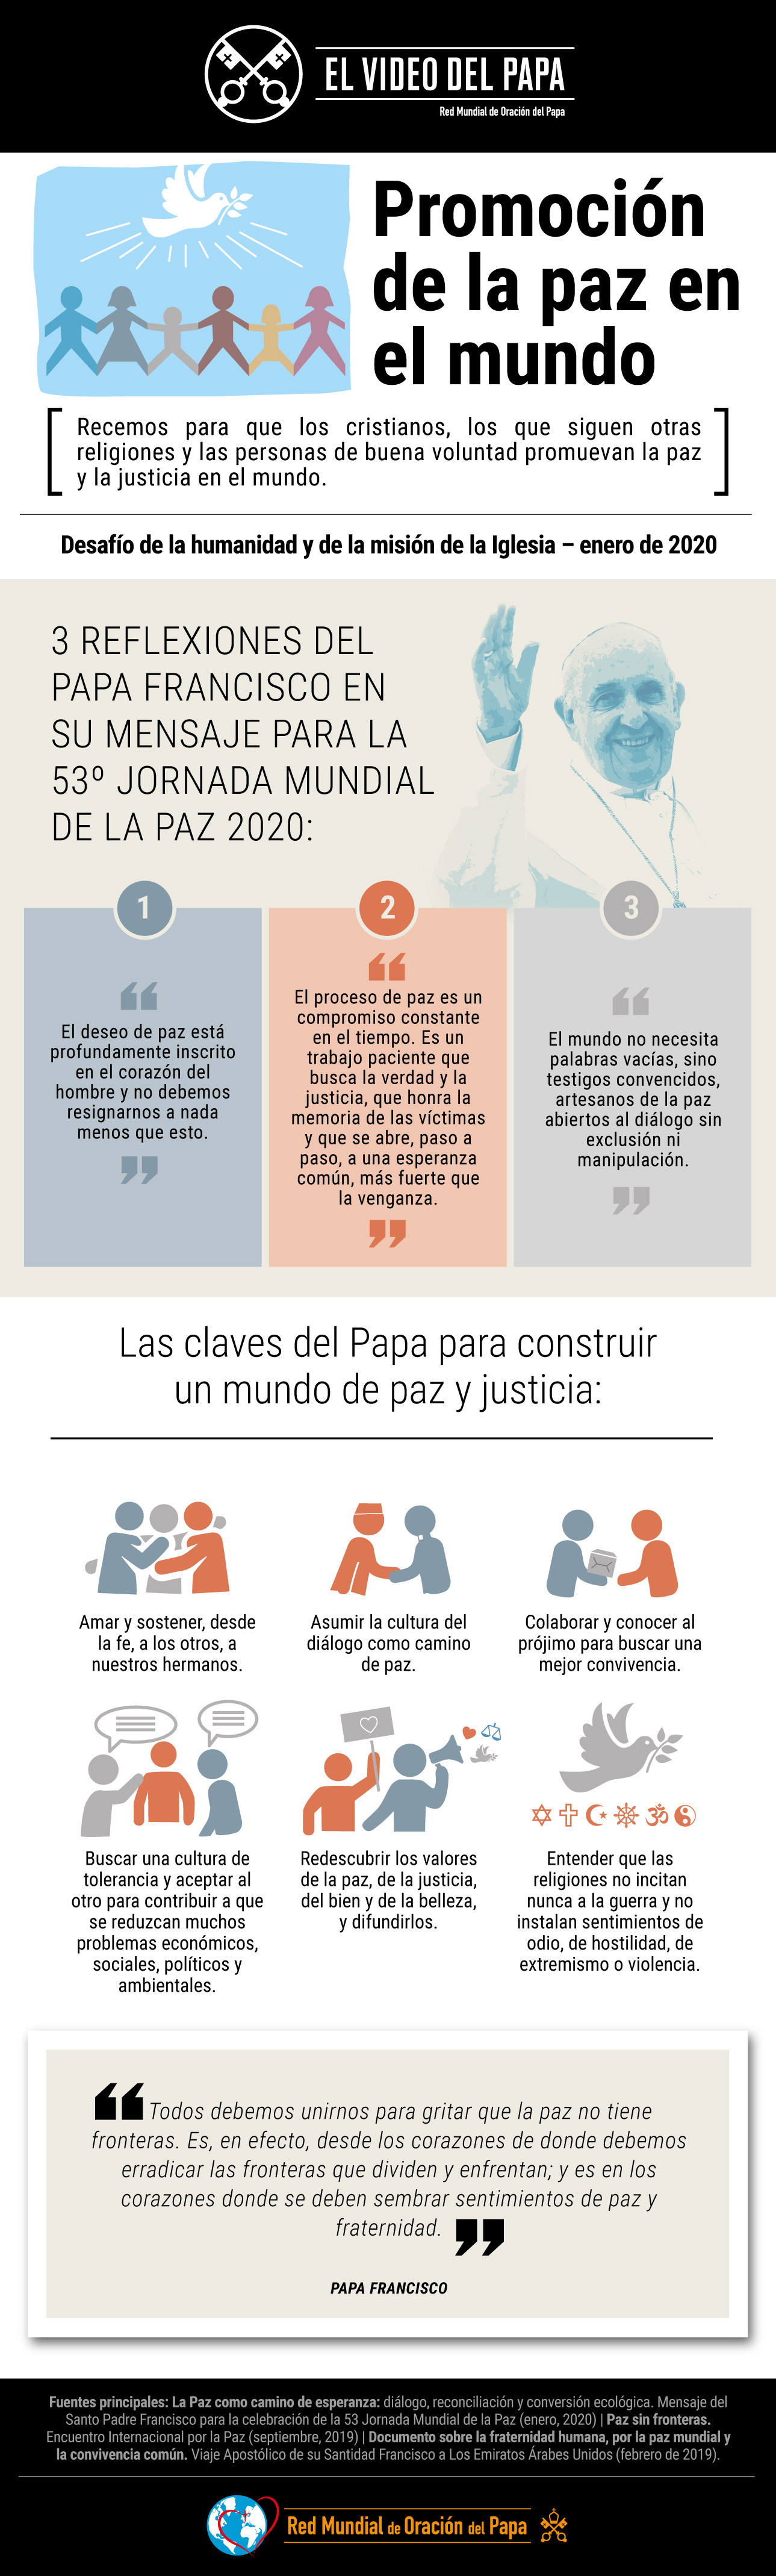 infografia-tpv-1-2020-es-el-video-del-papa-promocion-de-la-paz-en-el-mundo.jpg